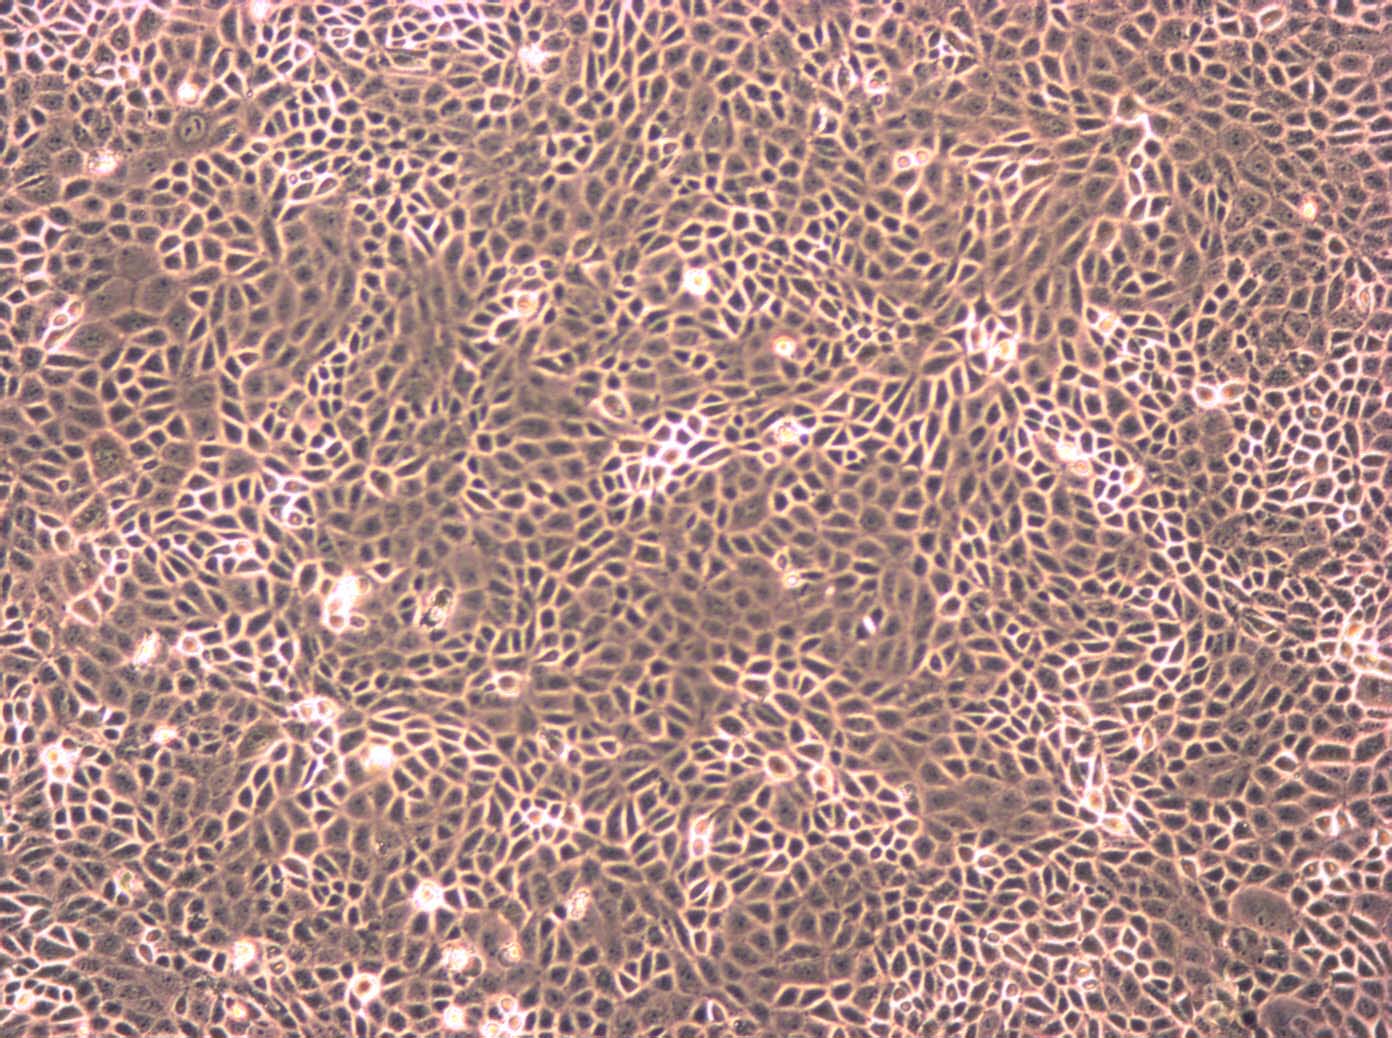 COLO 16 epithelioid cells人皮肤鳞癌细胞系